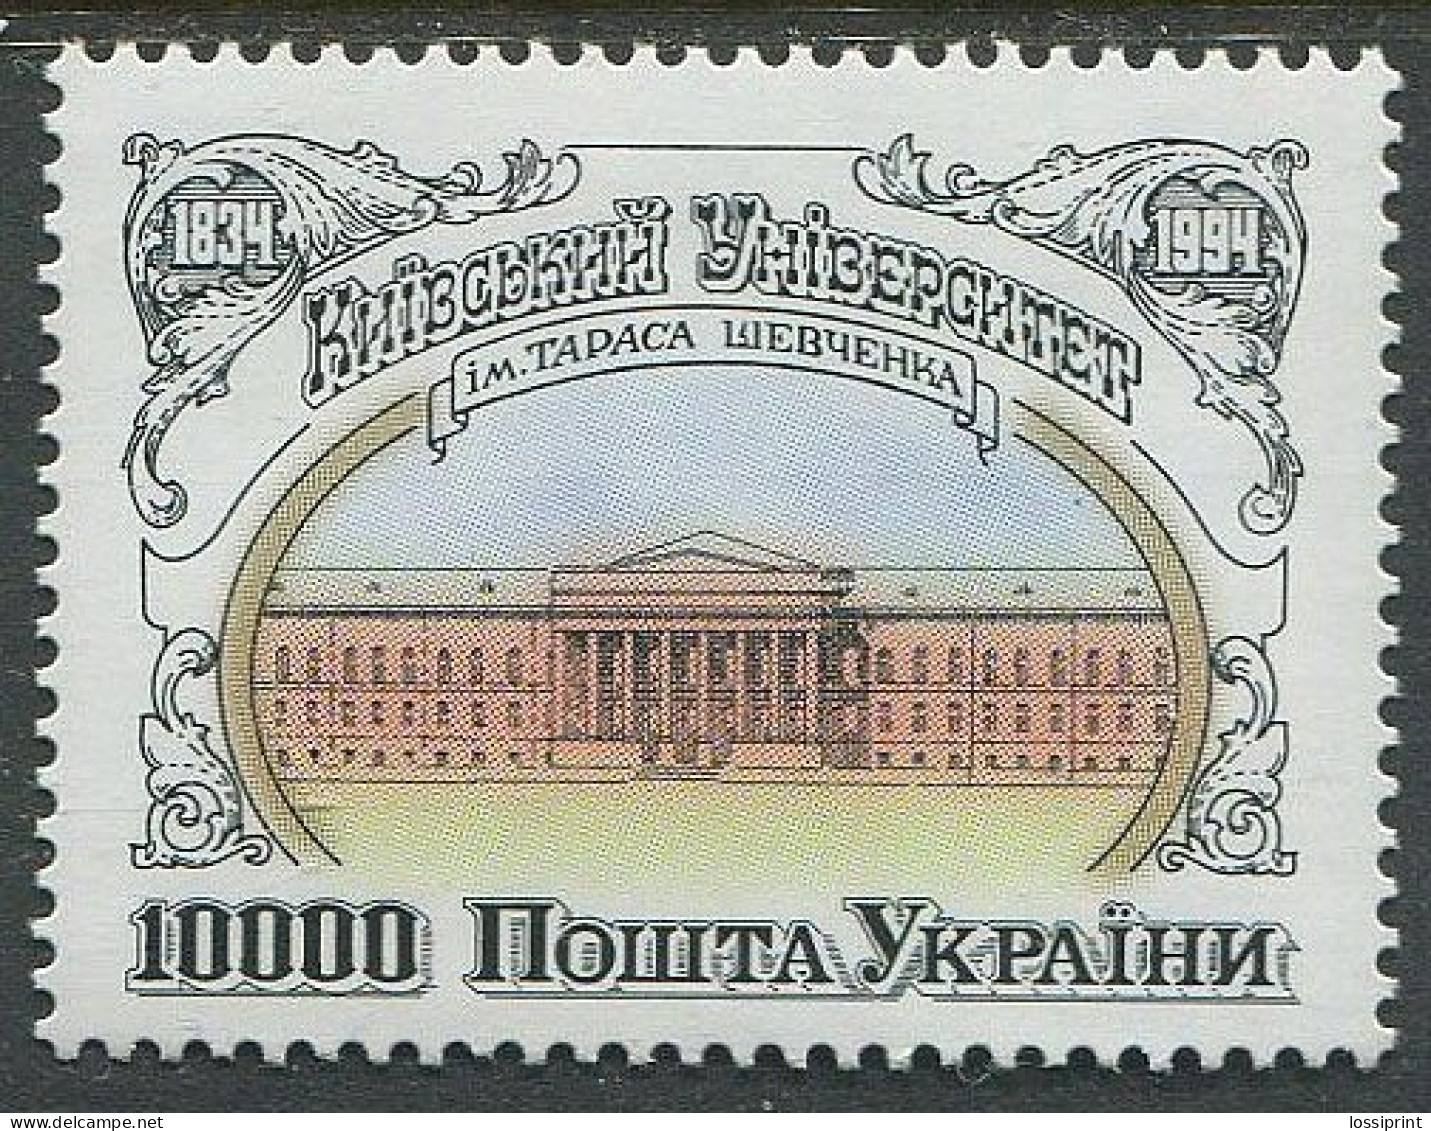 Ukraine:Ukraina:Unused Stamp Kiev University Named After Taras Shevtsenko, 1994, MNH - Ukraine